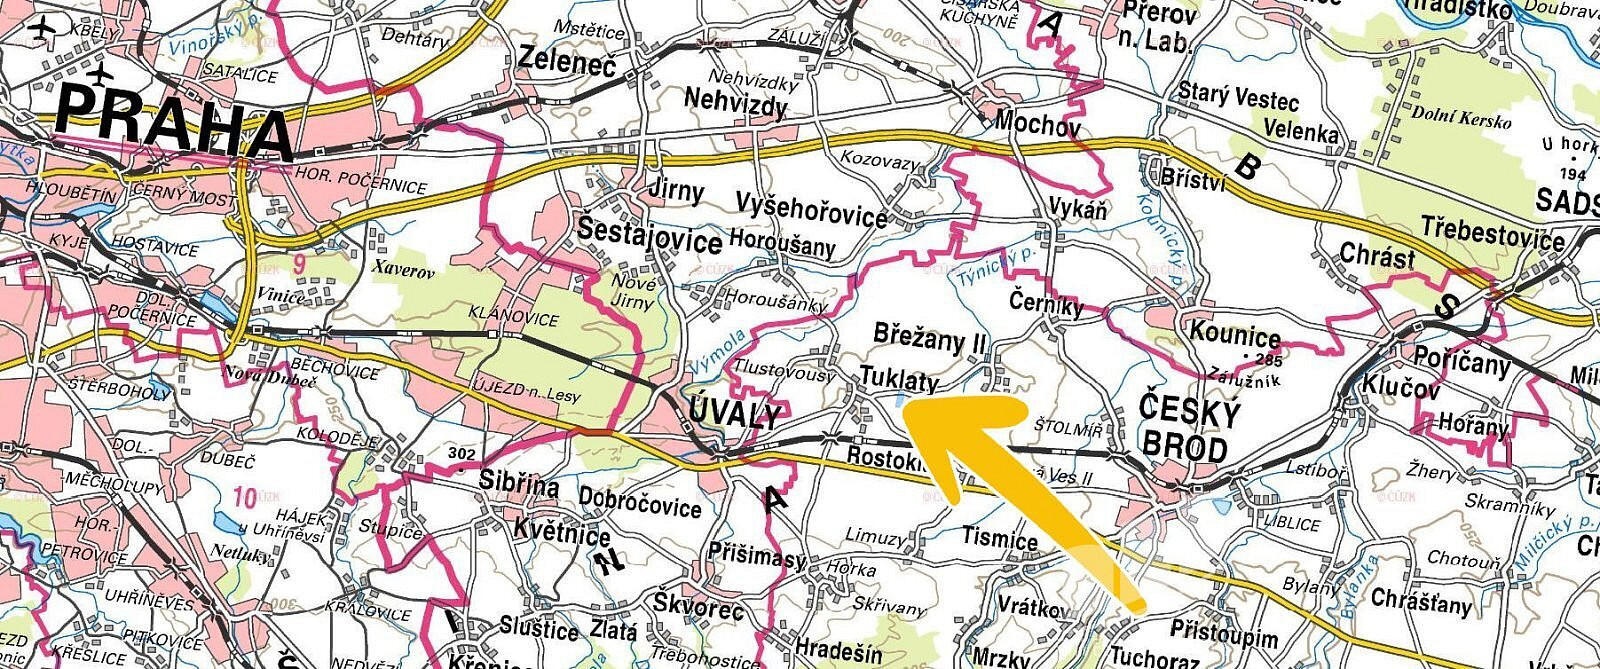 Břežany II, okres Kolín